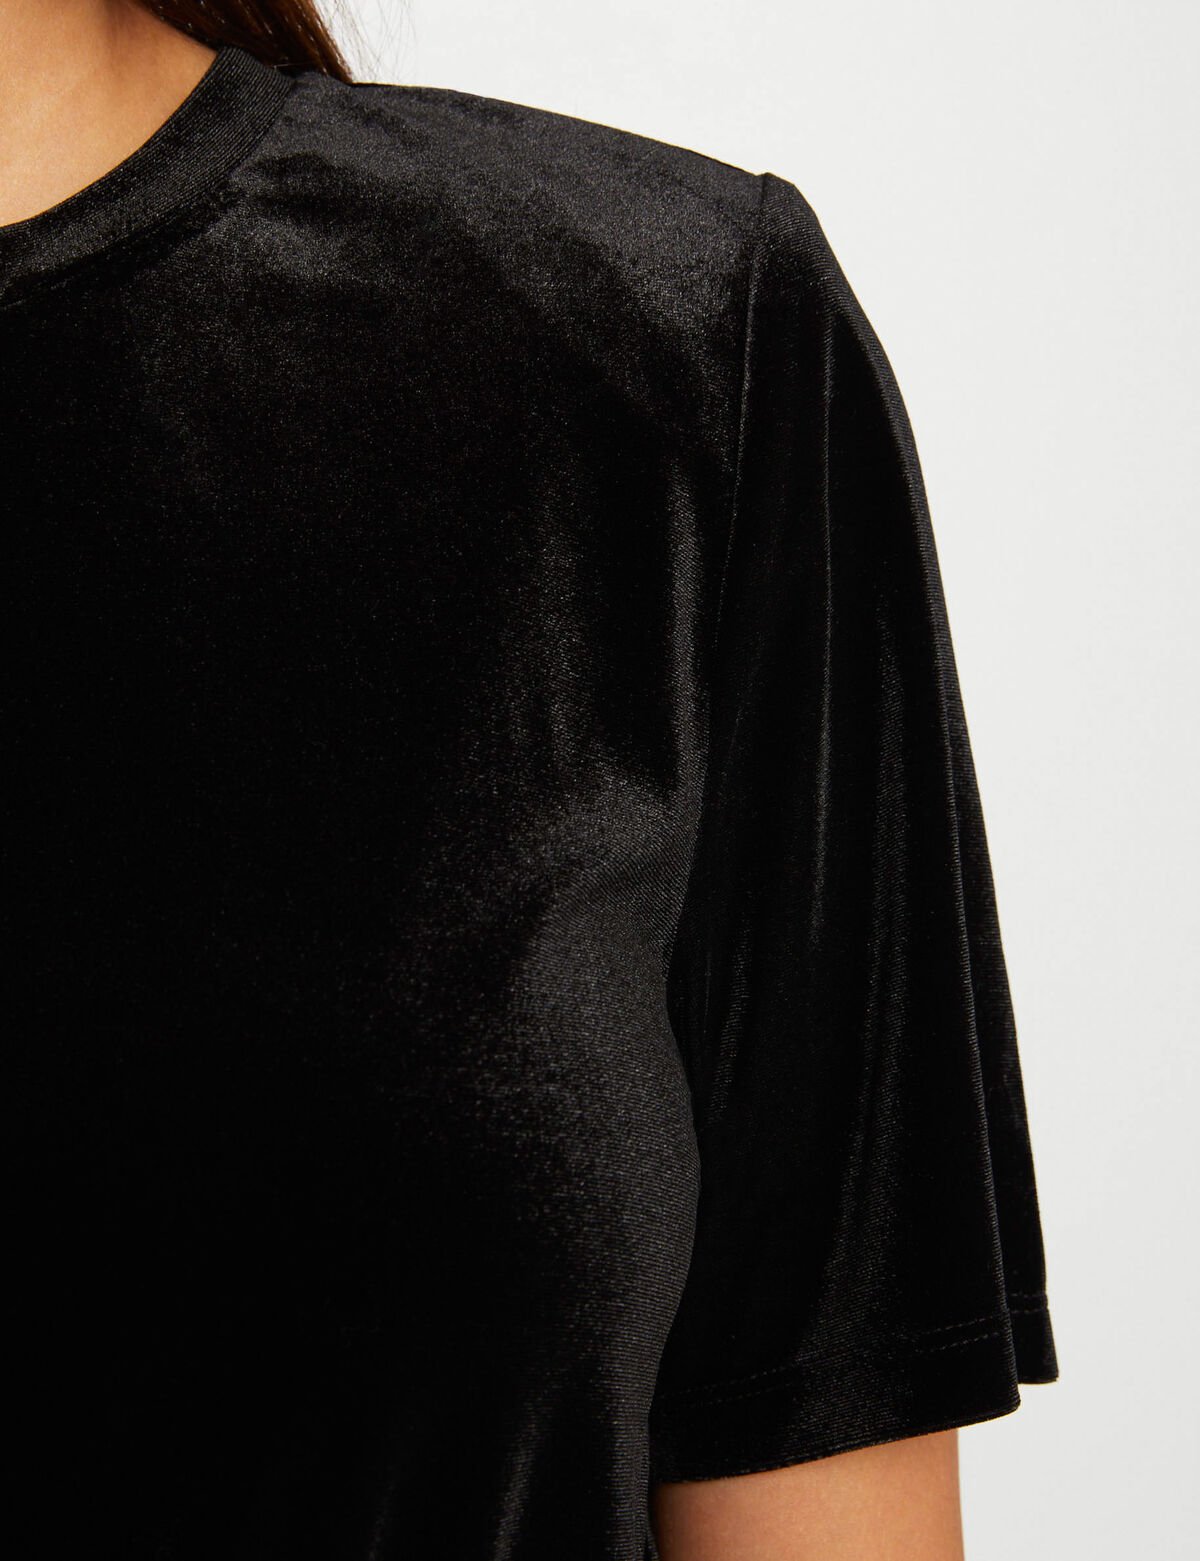 Camiseta manga corta terciopelo negro 232-Daceta